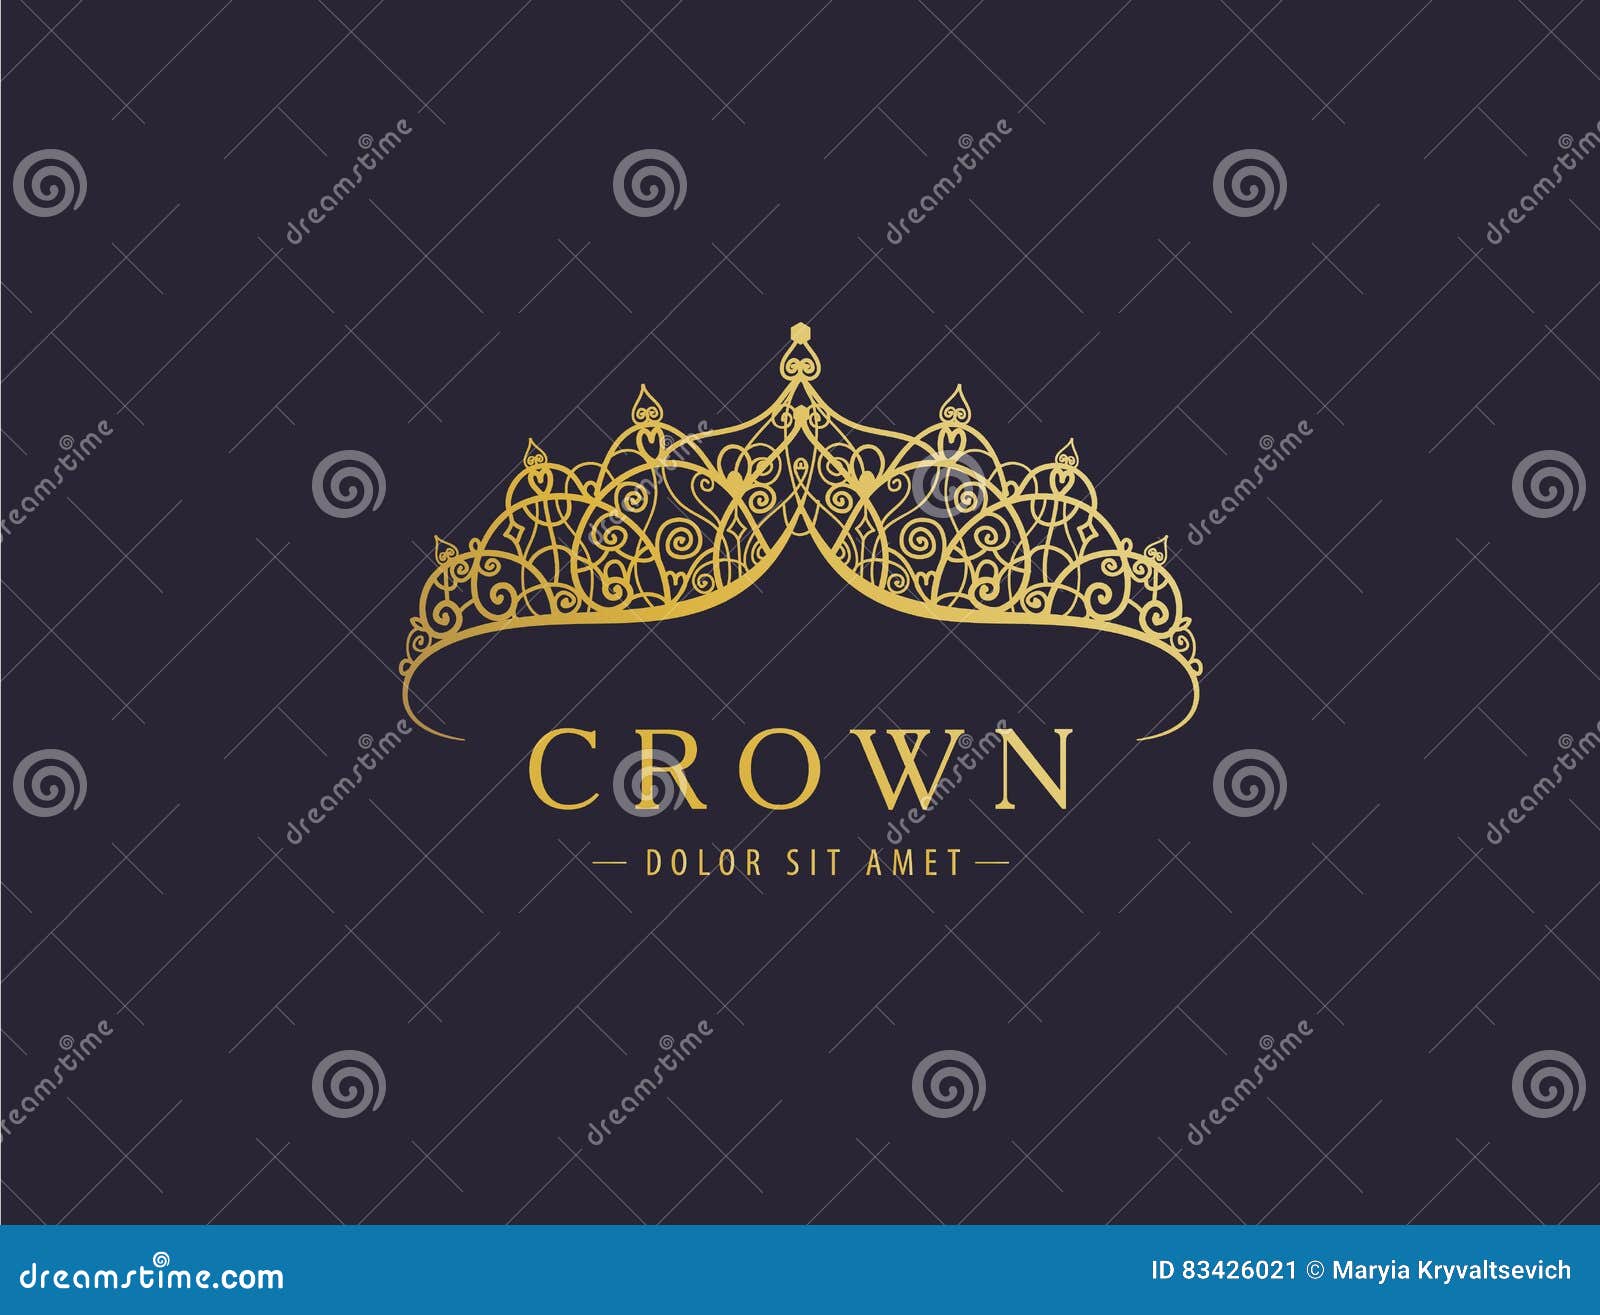 Abstract Crown Logo Design Letter Mm Stock Illustration 1934137790